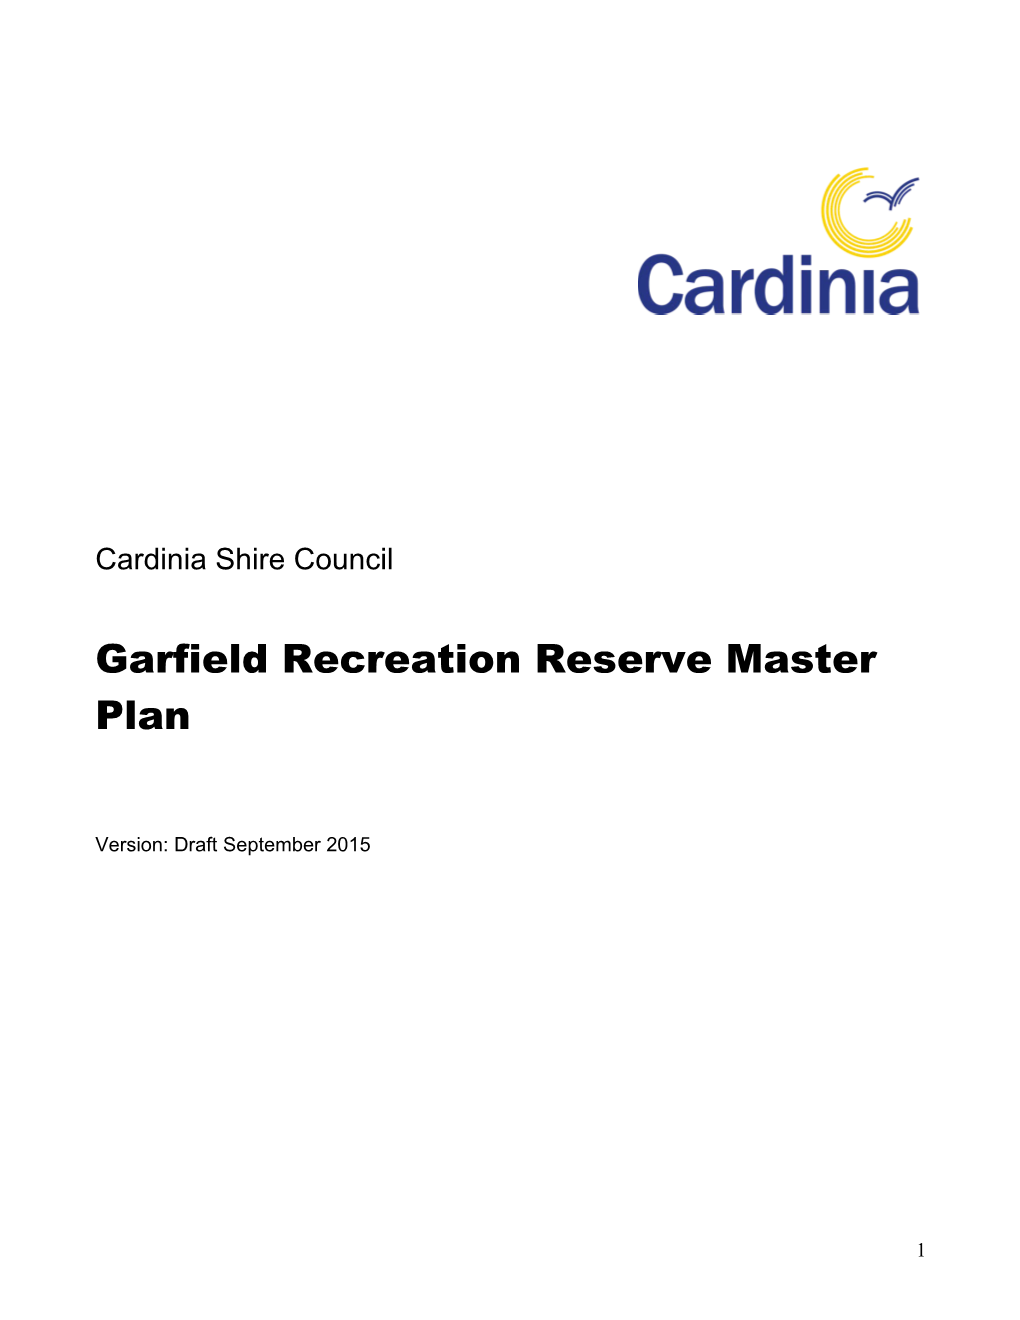 Garfield Recreation Reserve Master Plan